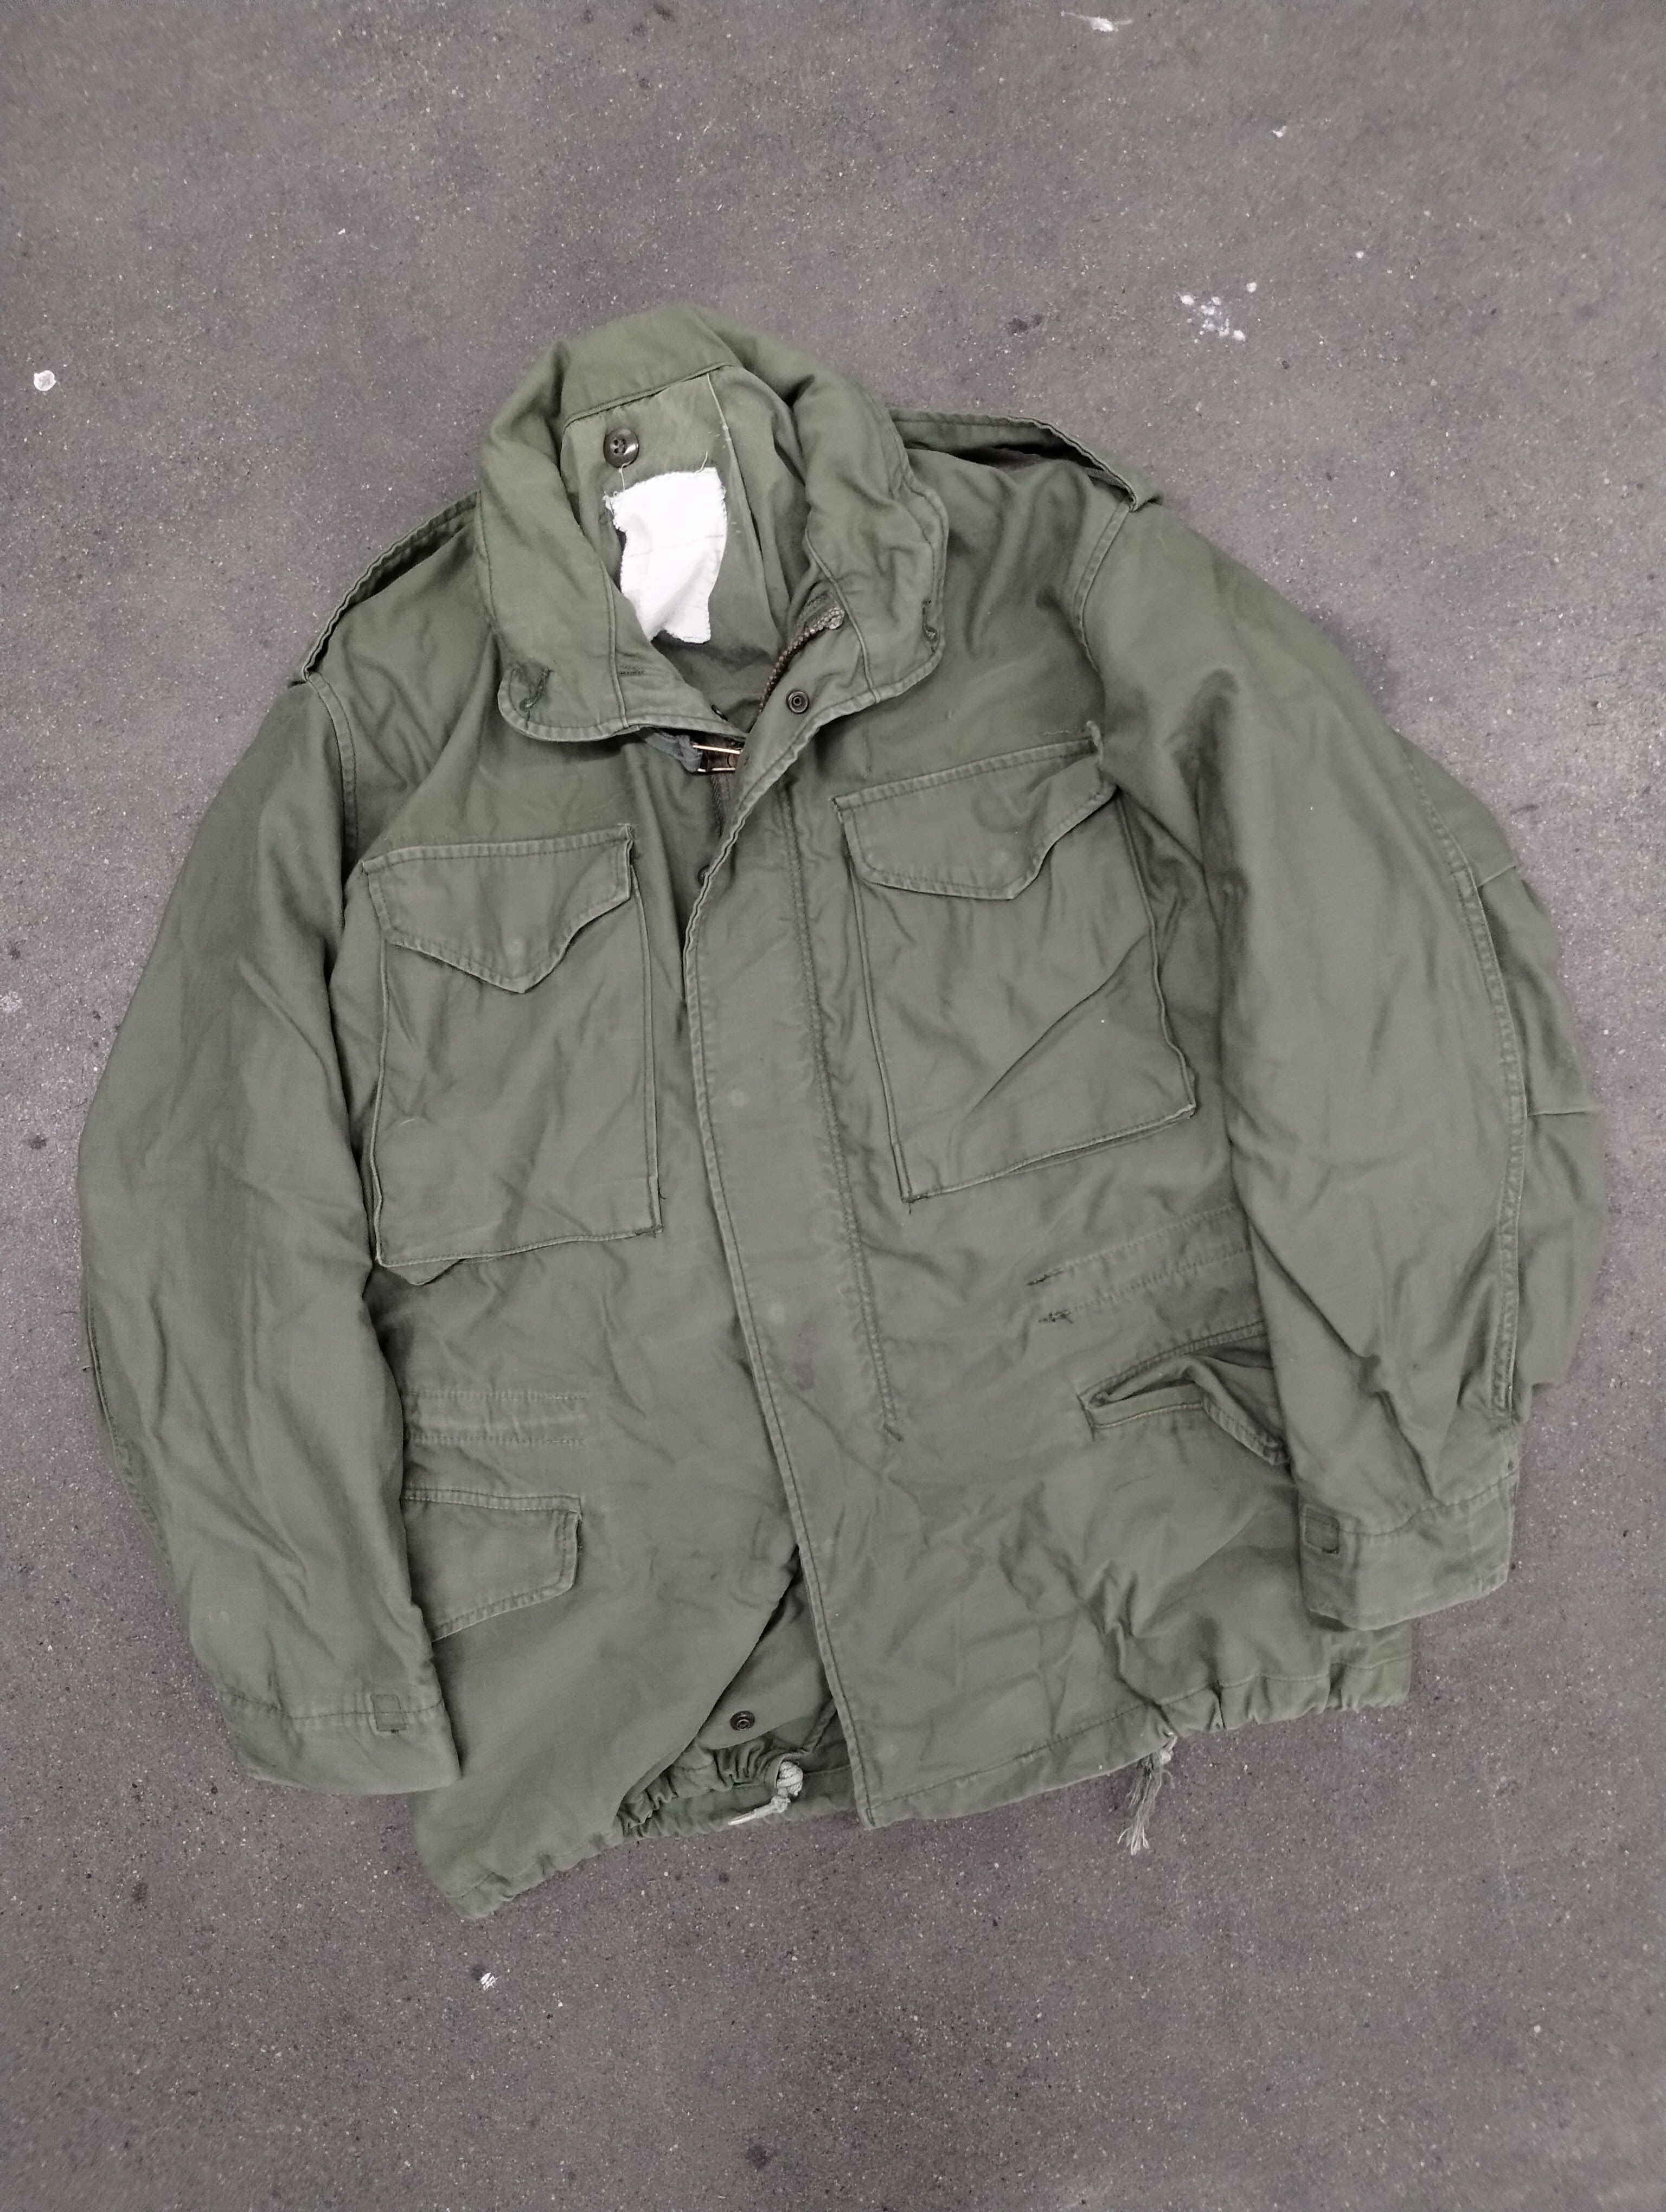 Vintage Vintage Military Zip Up Cotton Field Jacket Size US S / EU 44-46 / 1 - 1 Preview